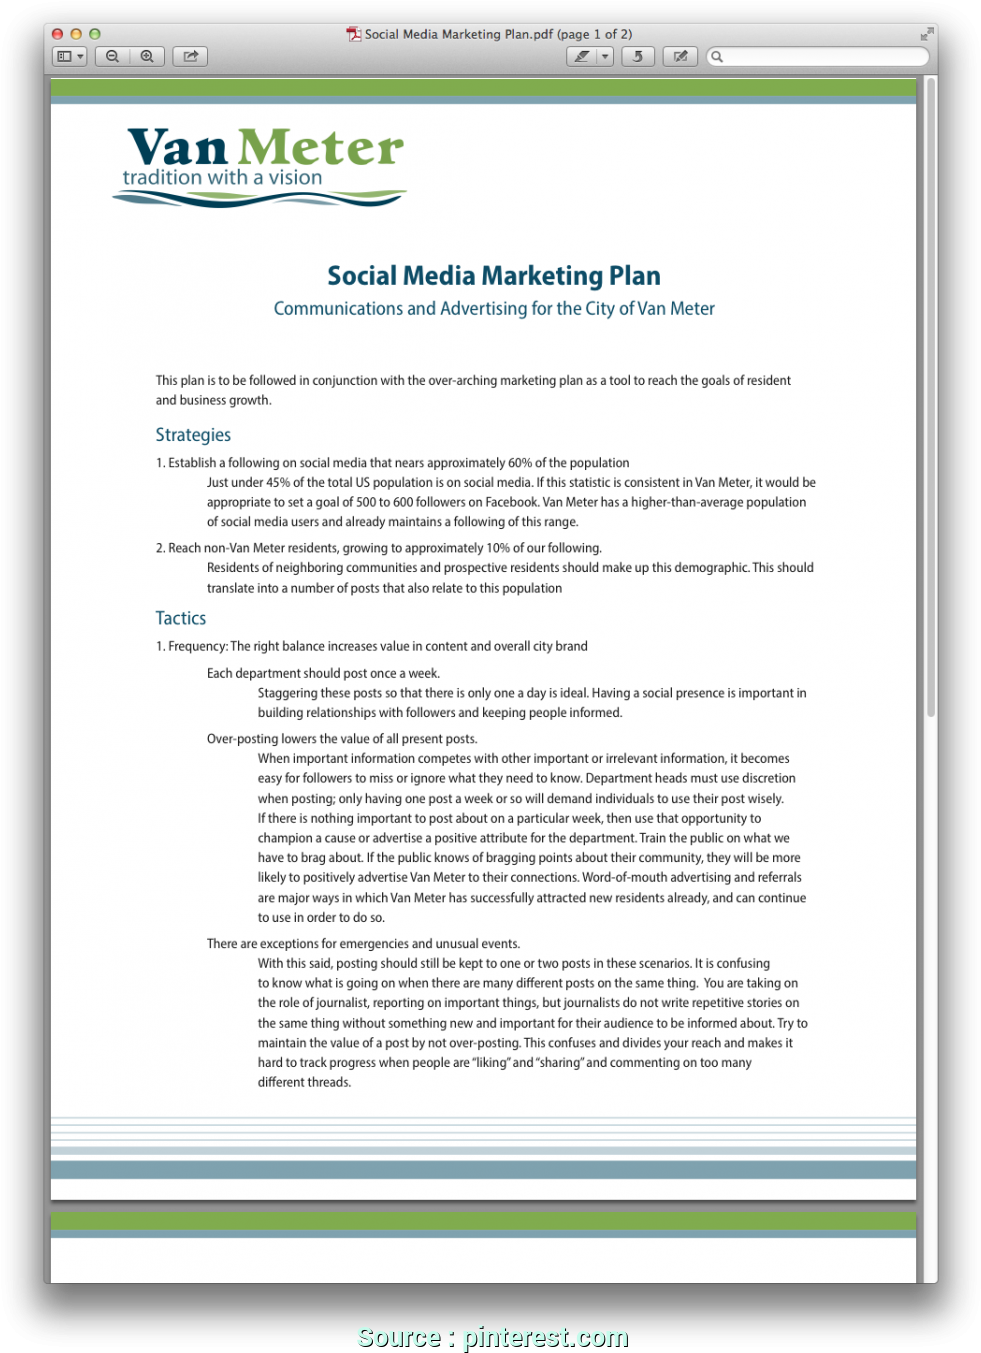 Social Media Marketing Plan Document PNG